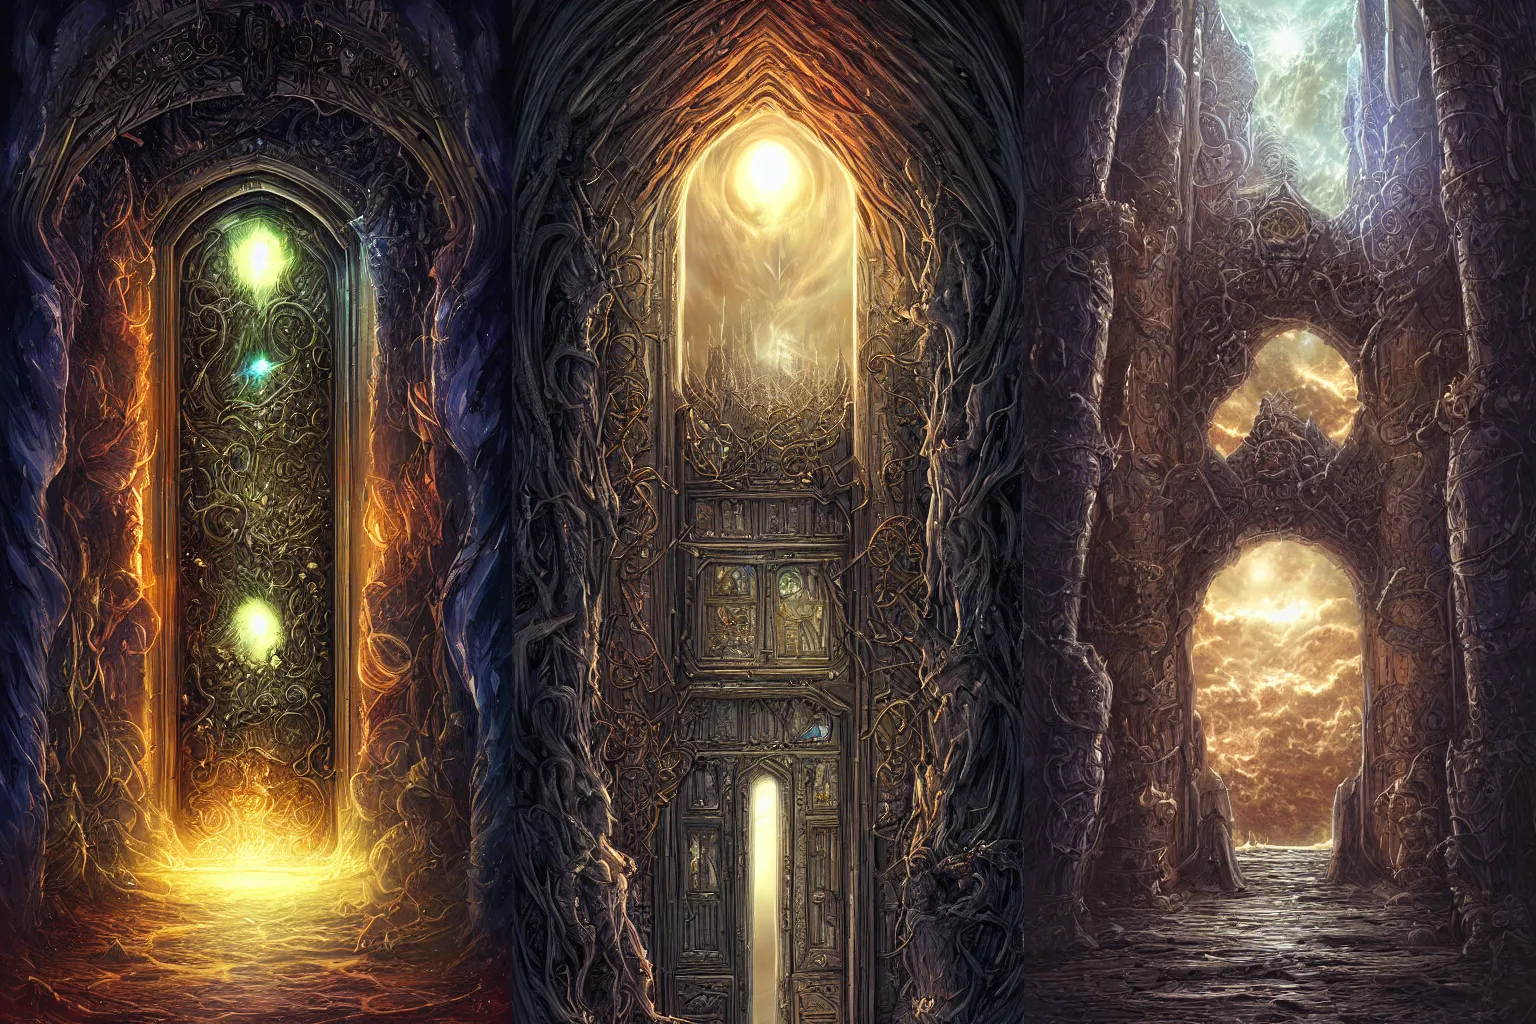 Prompt: the gate to the eternal kingdom of dark matter, fantasy, digital art, hd, detailed.